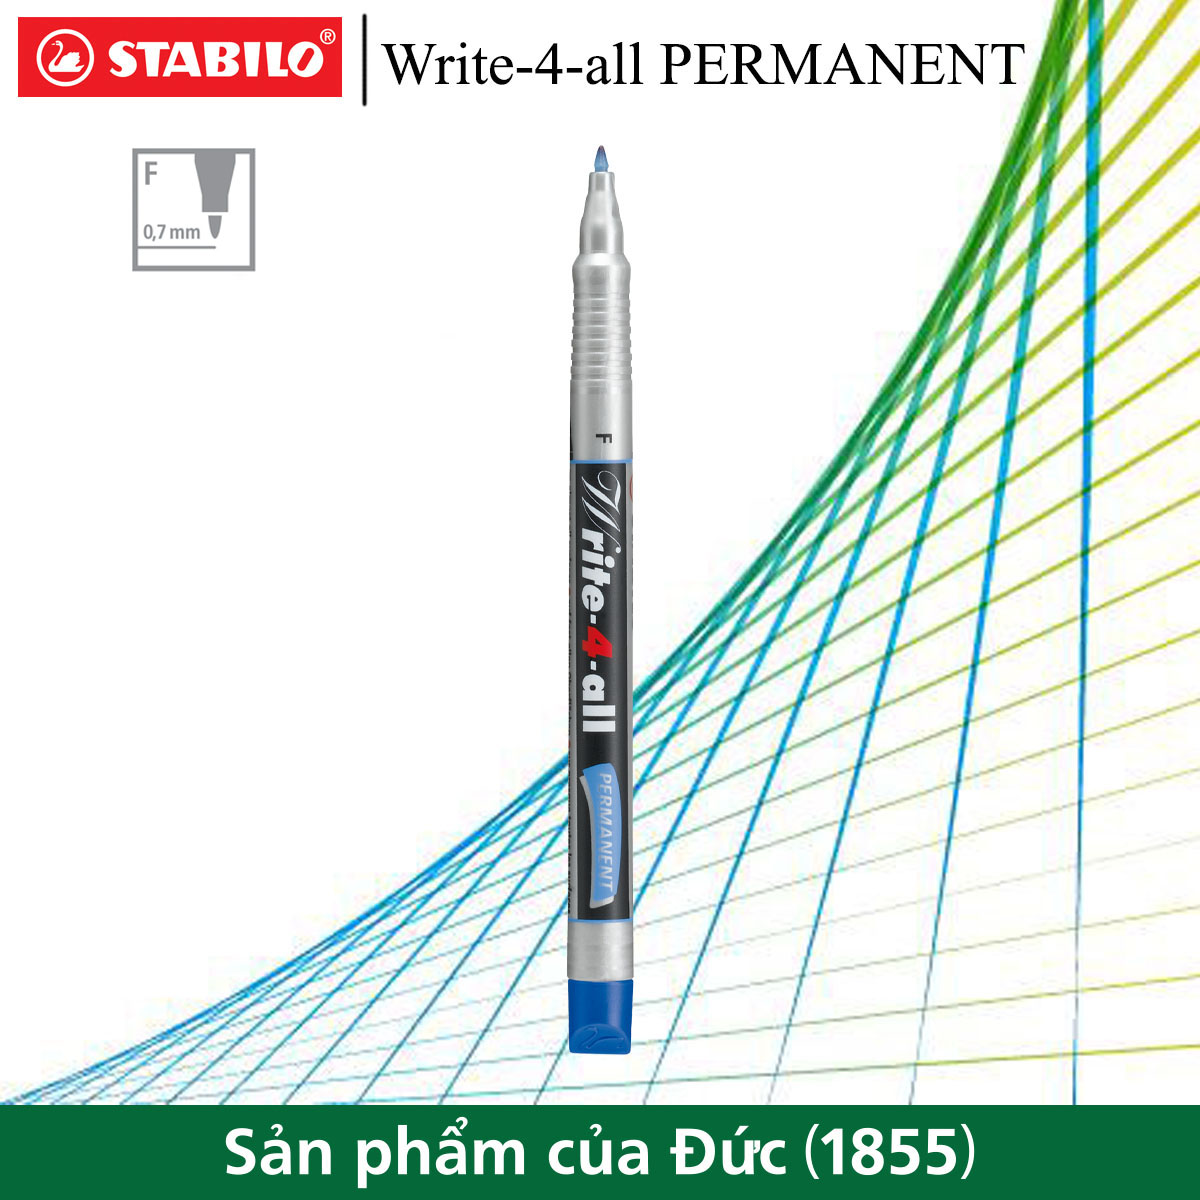 Bút kỹ thuật STABILO Write-4-all PERMANENT F 0.7mm (AP156F)